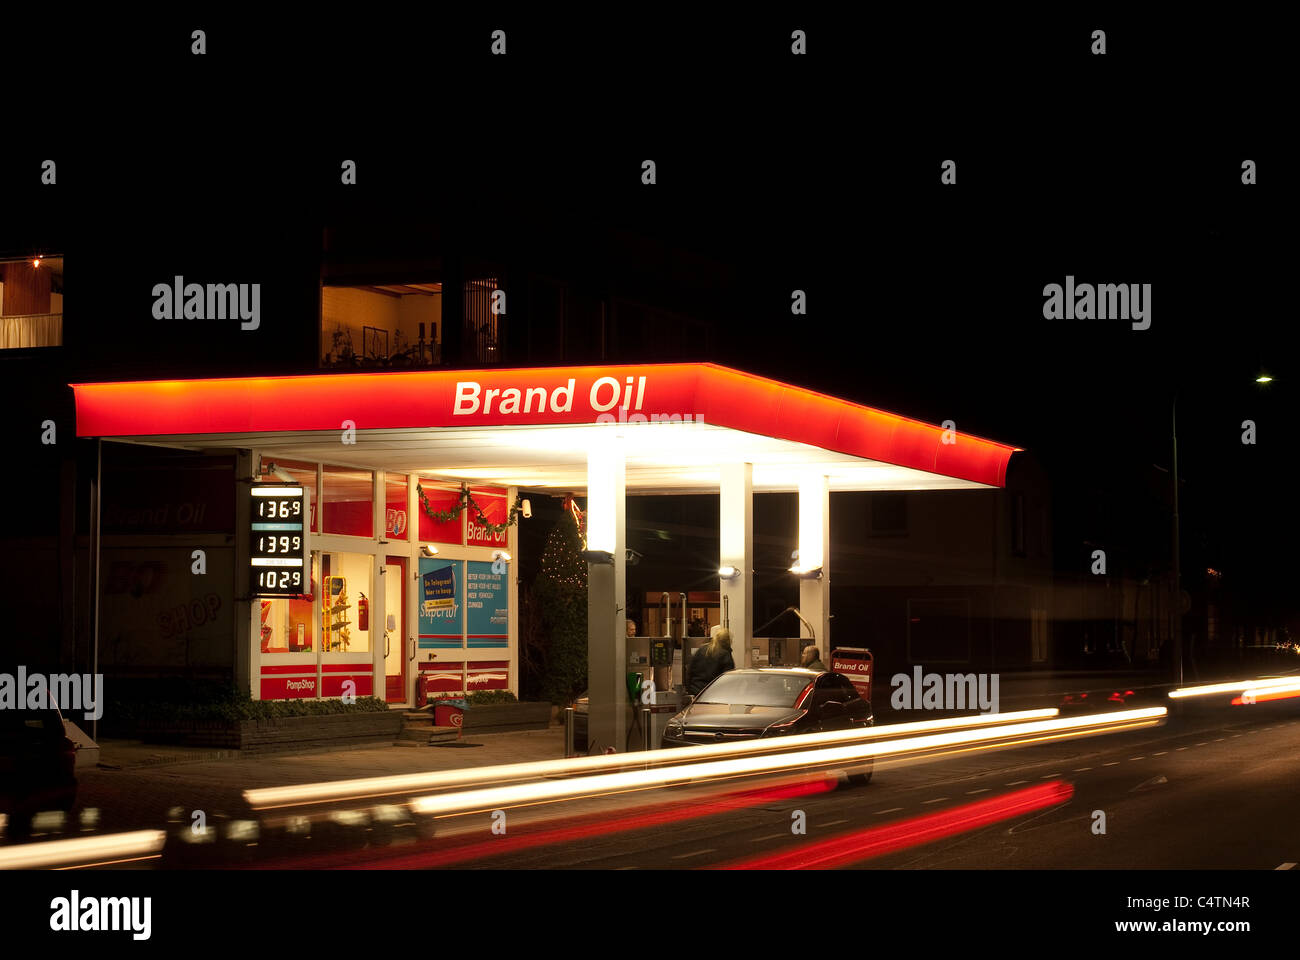 Brand Oil gas station in Lochem, Netherlands Stock Photo